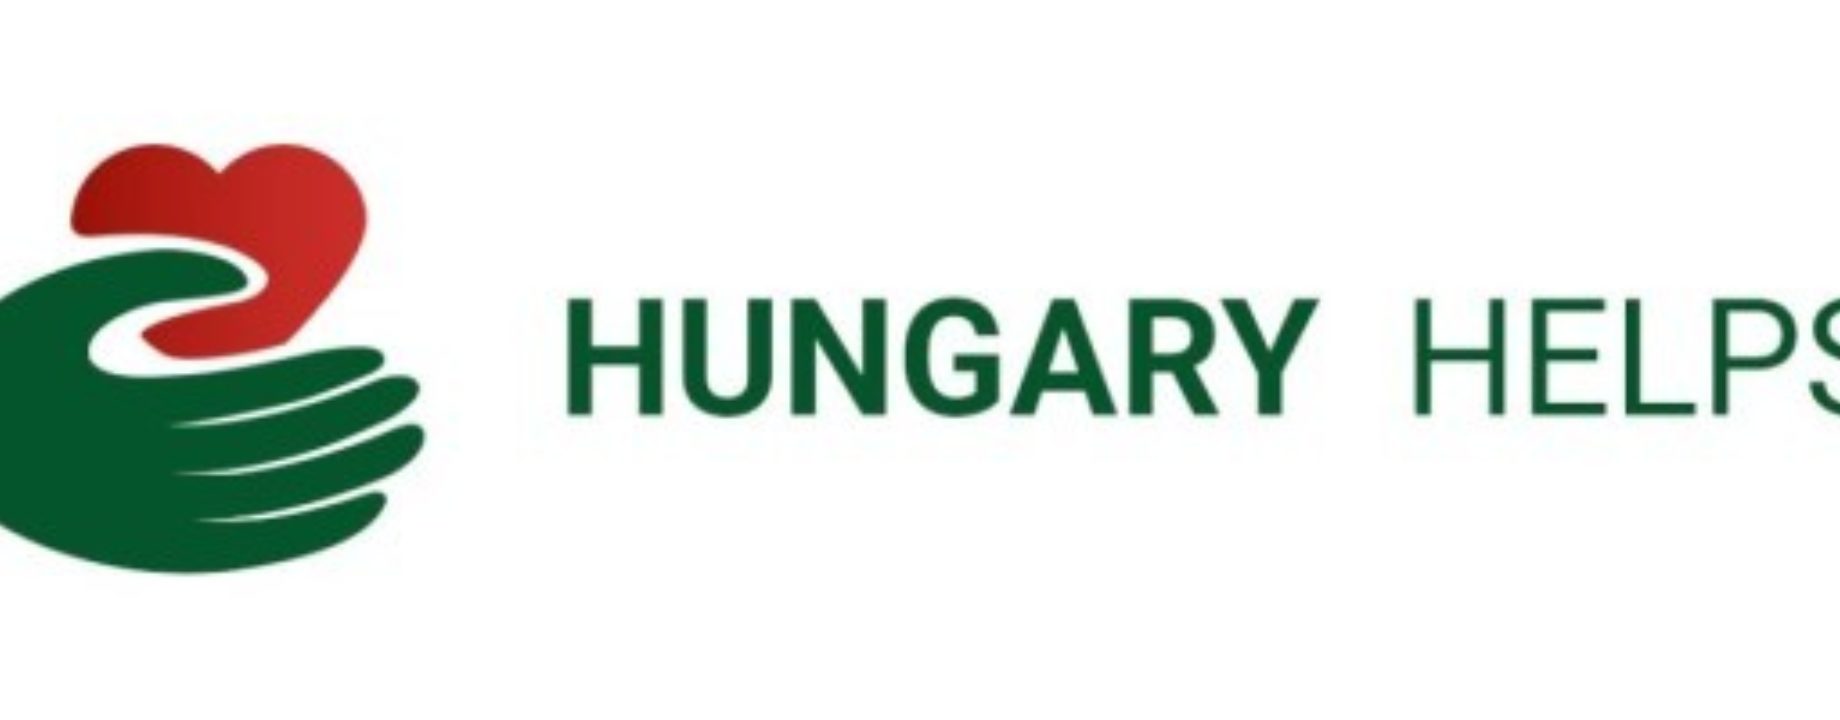 Hungary Helps